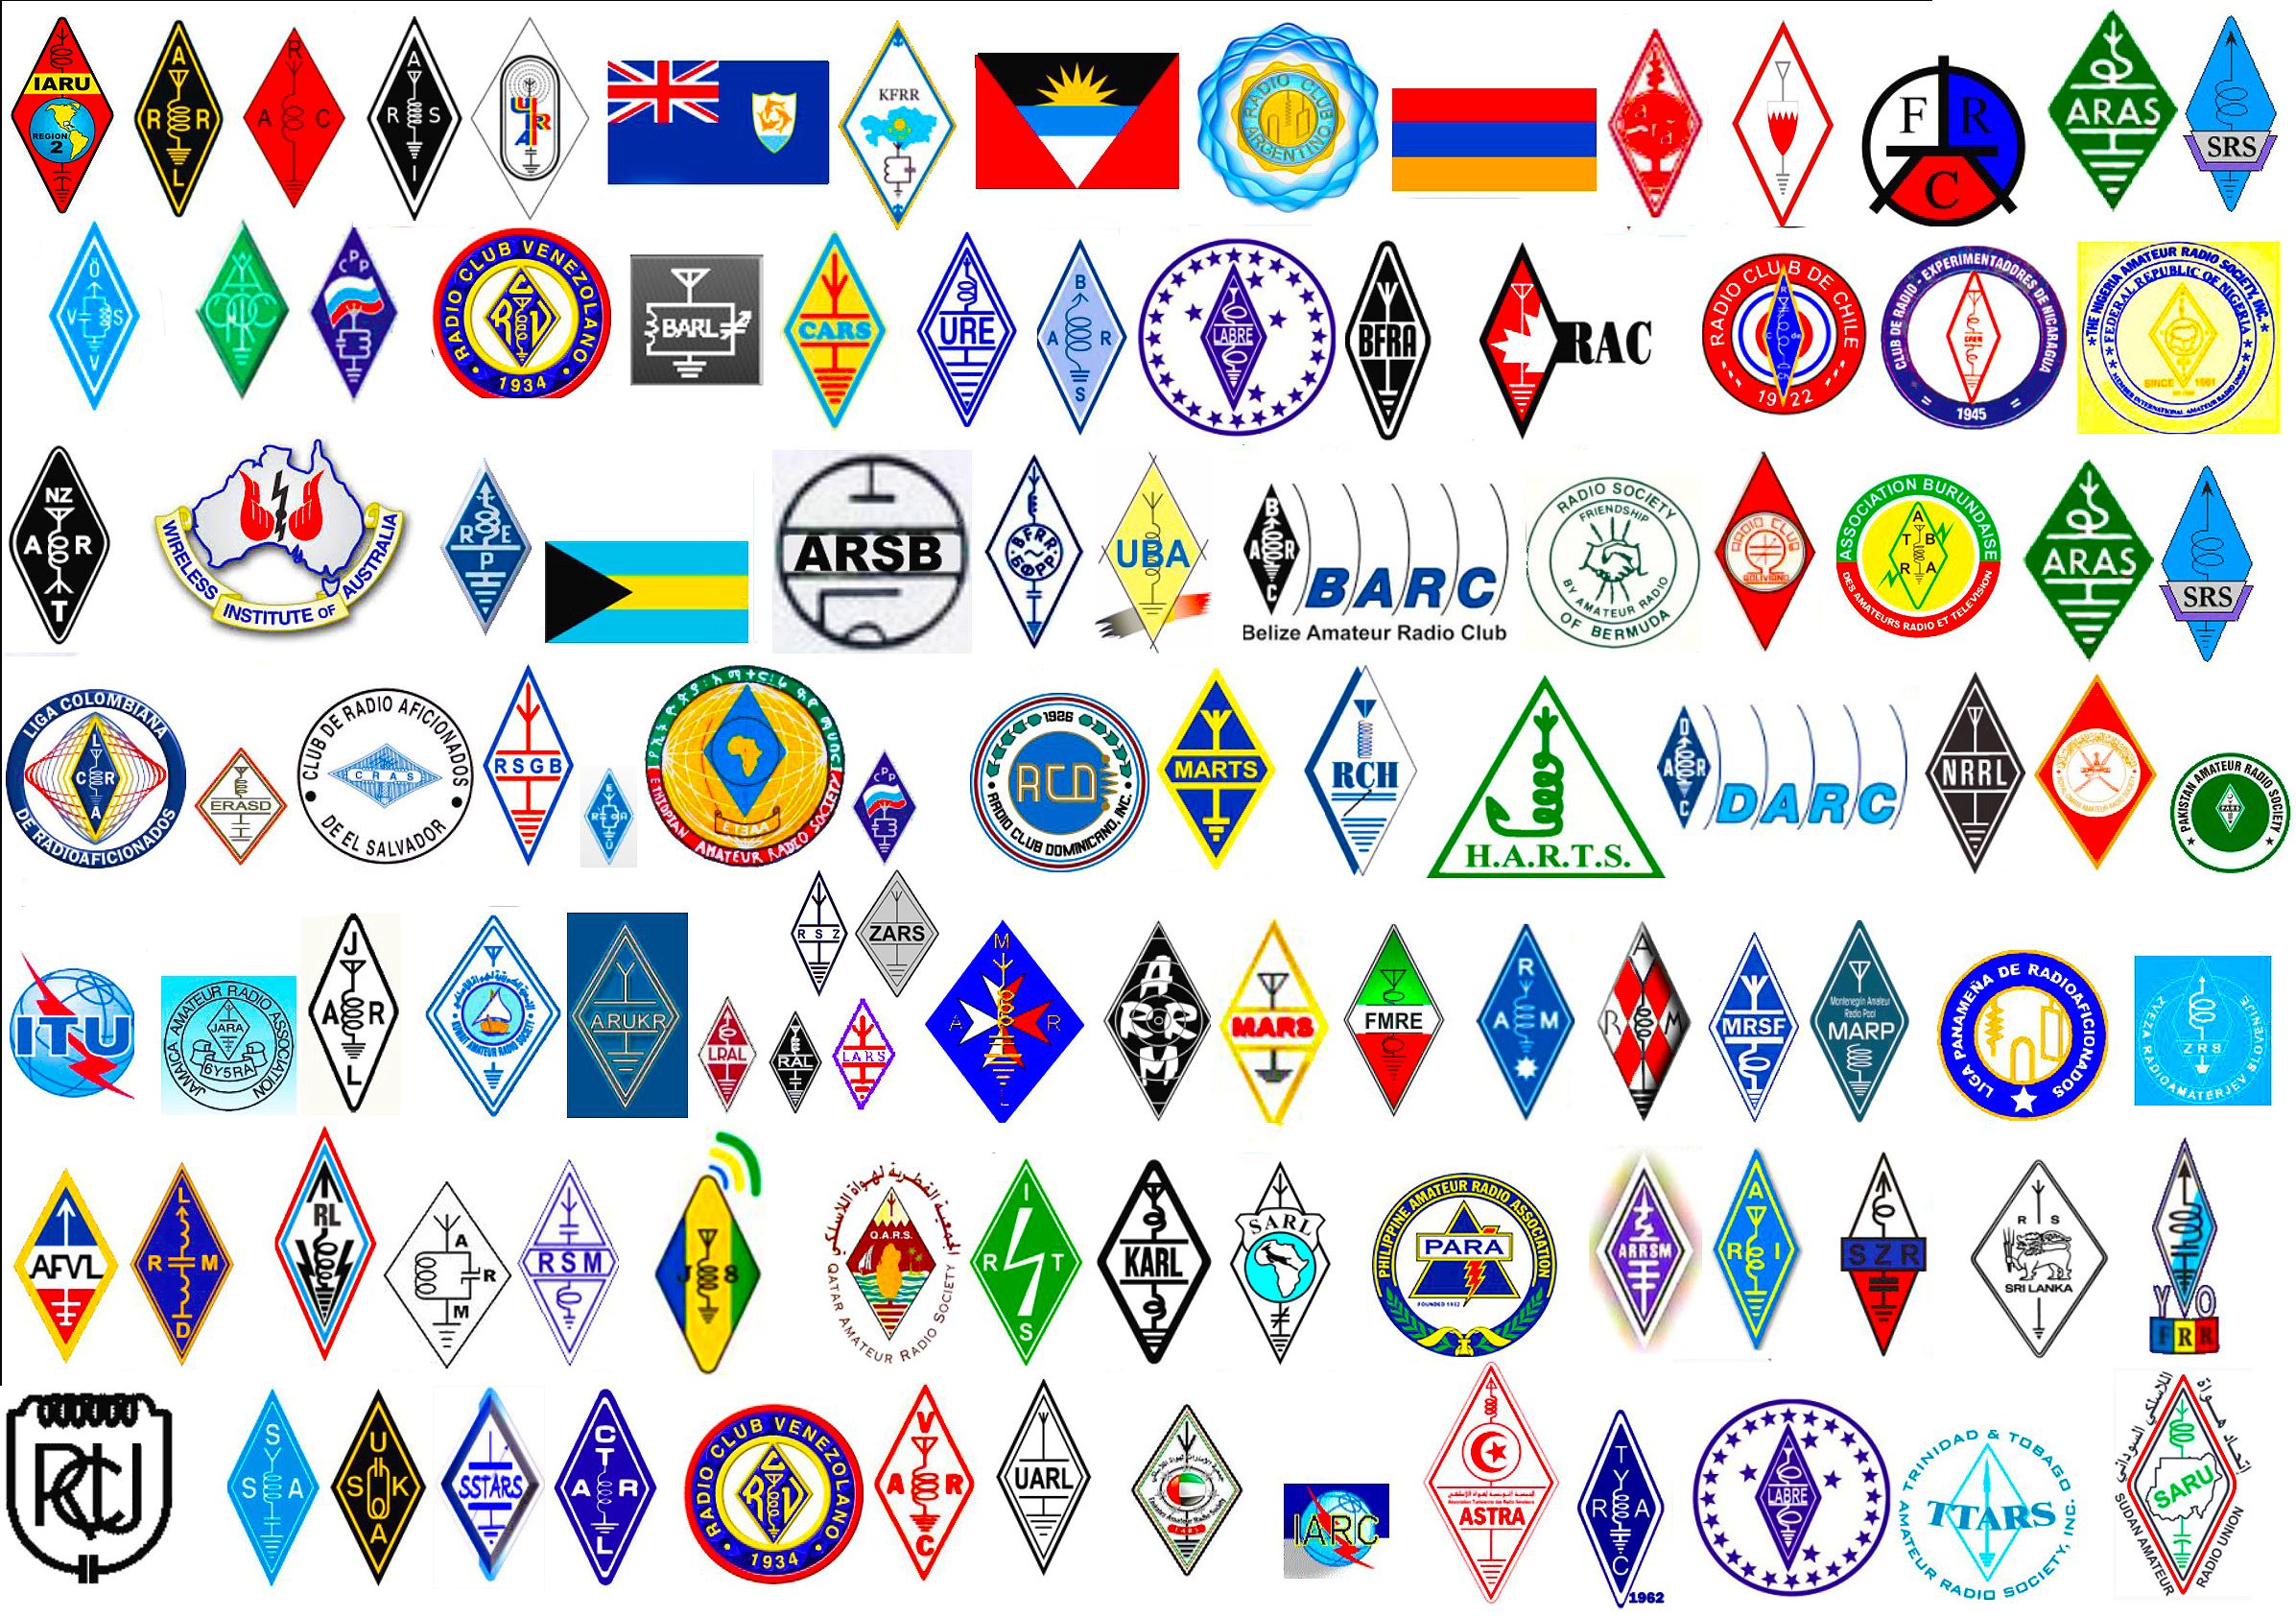 IARU Logos